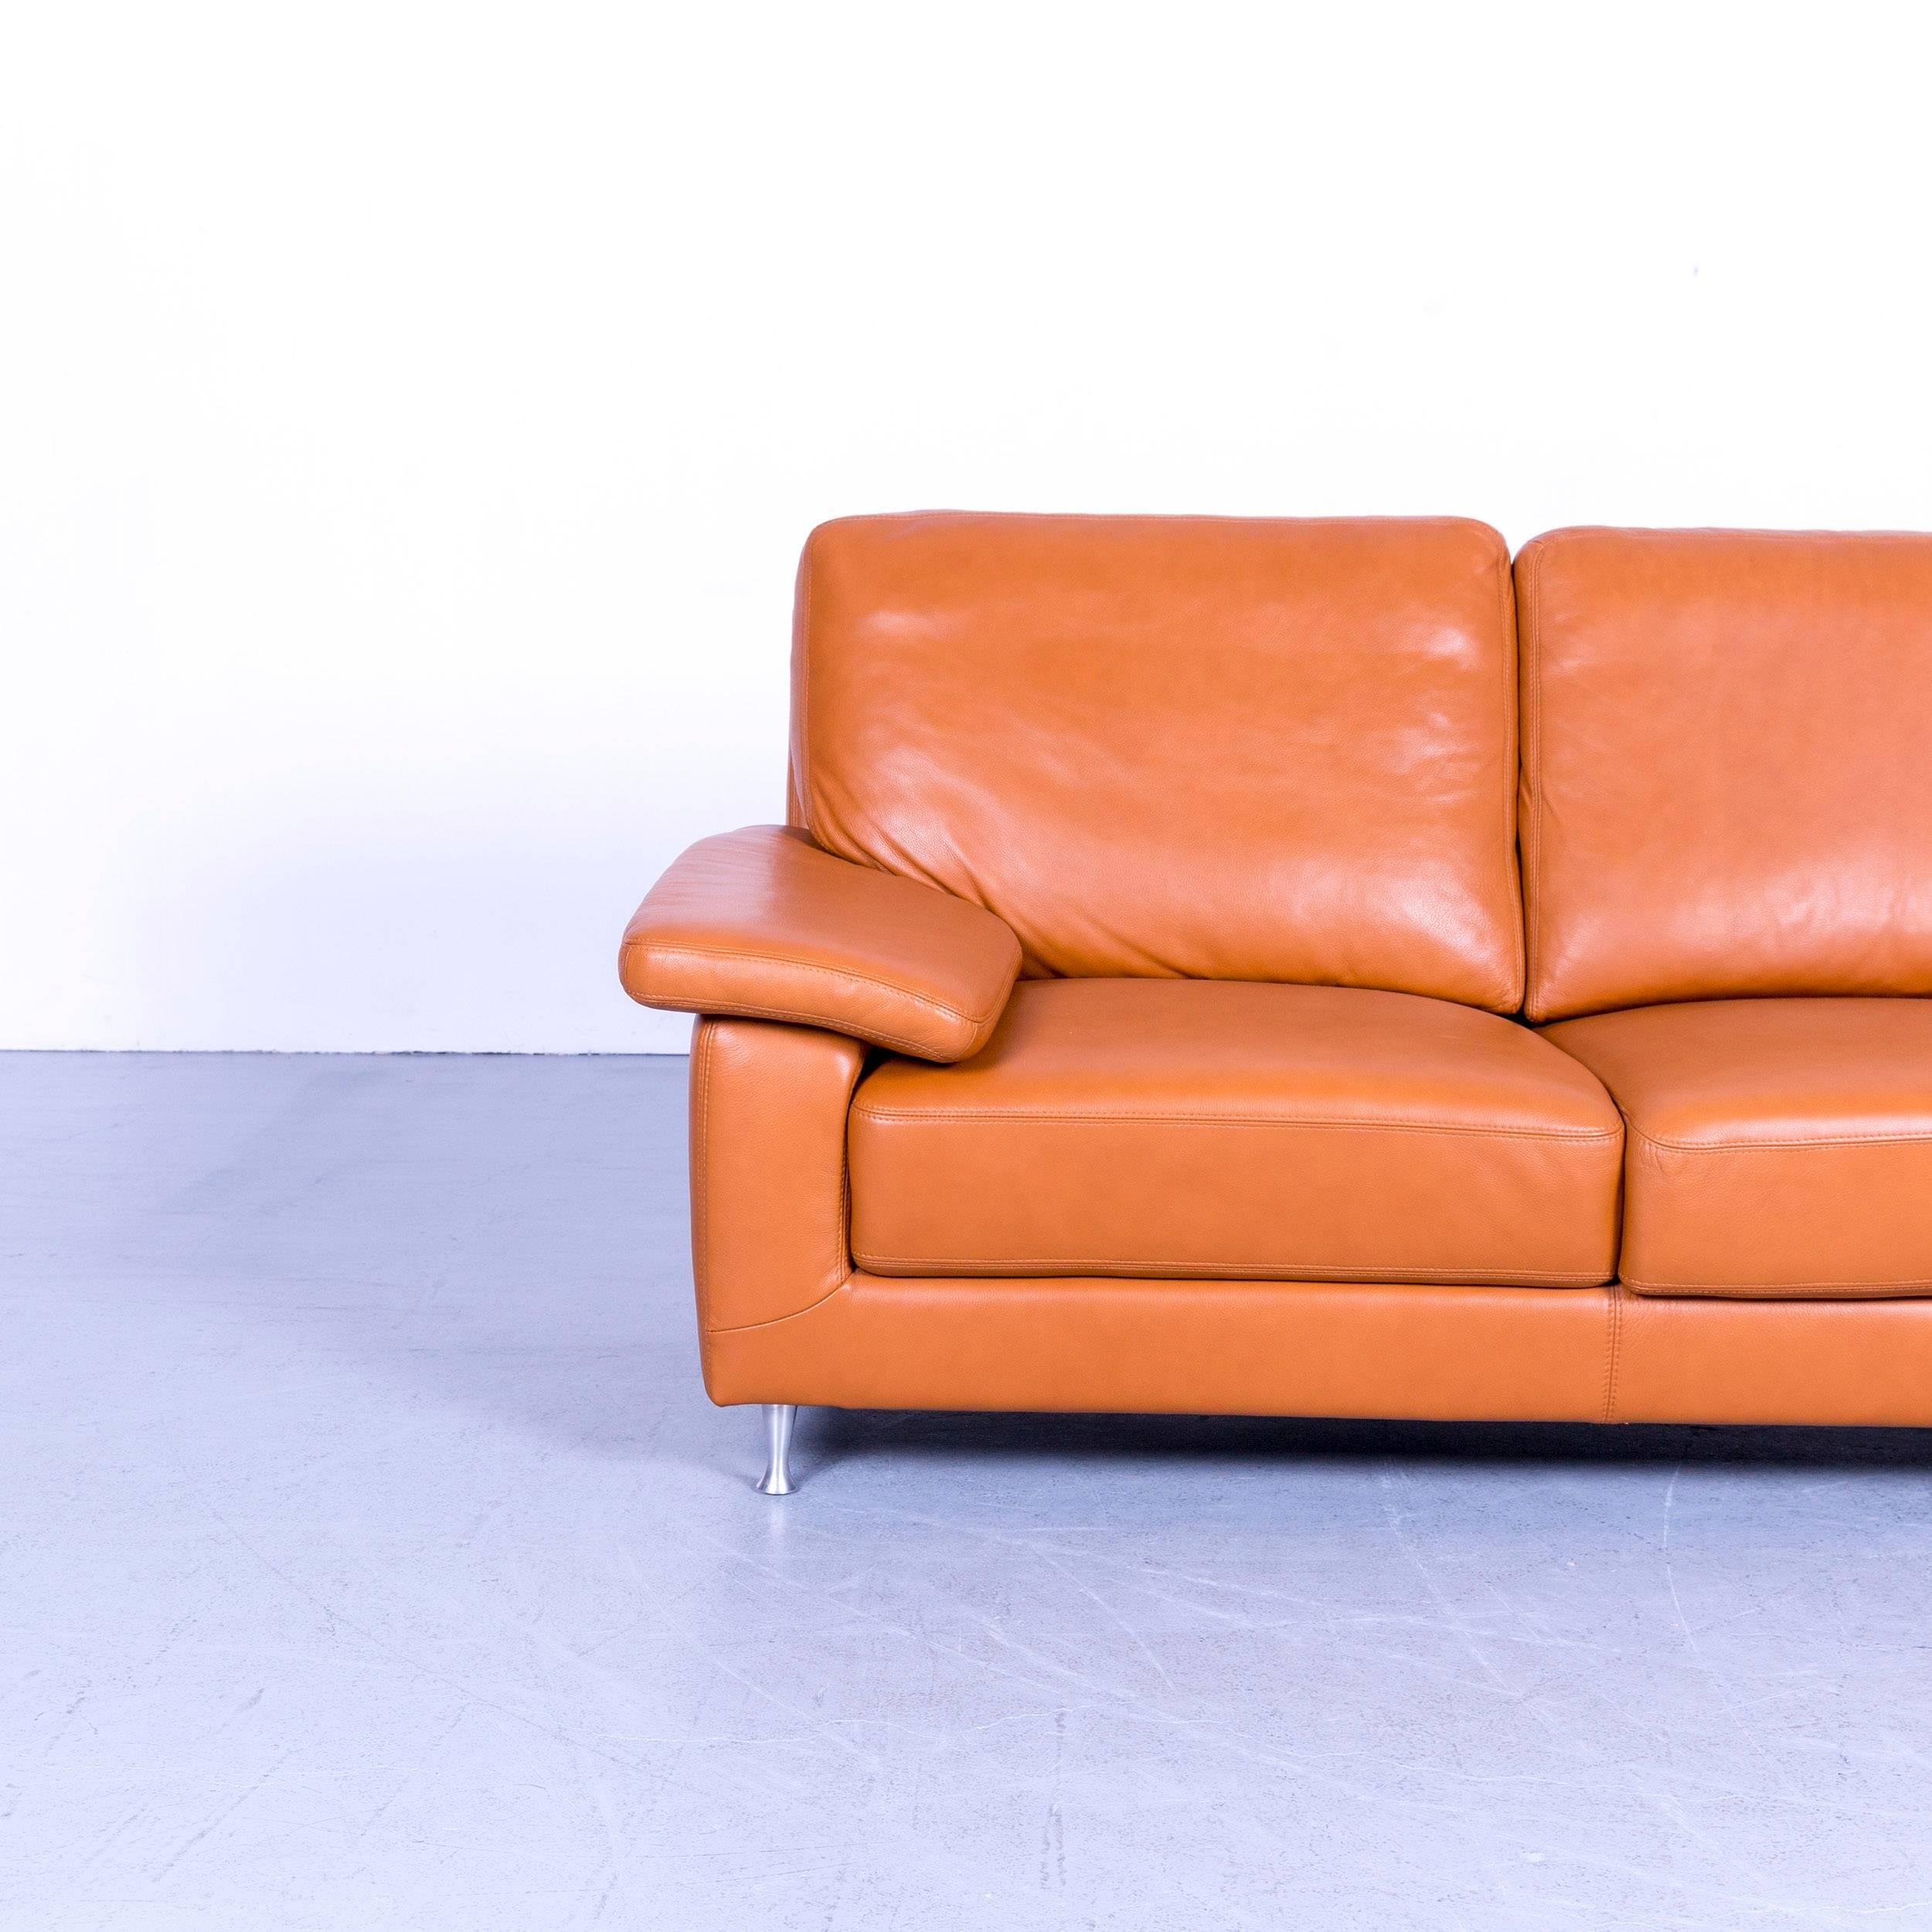 German Willi Schillig Designer Sofa Two-Seat Beige Leather Couch